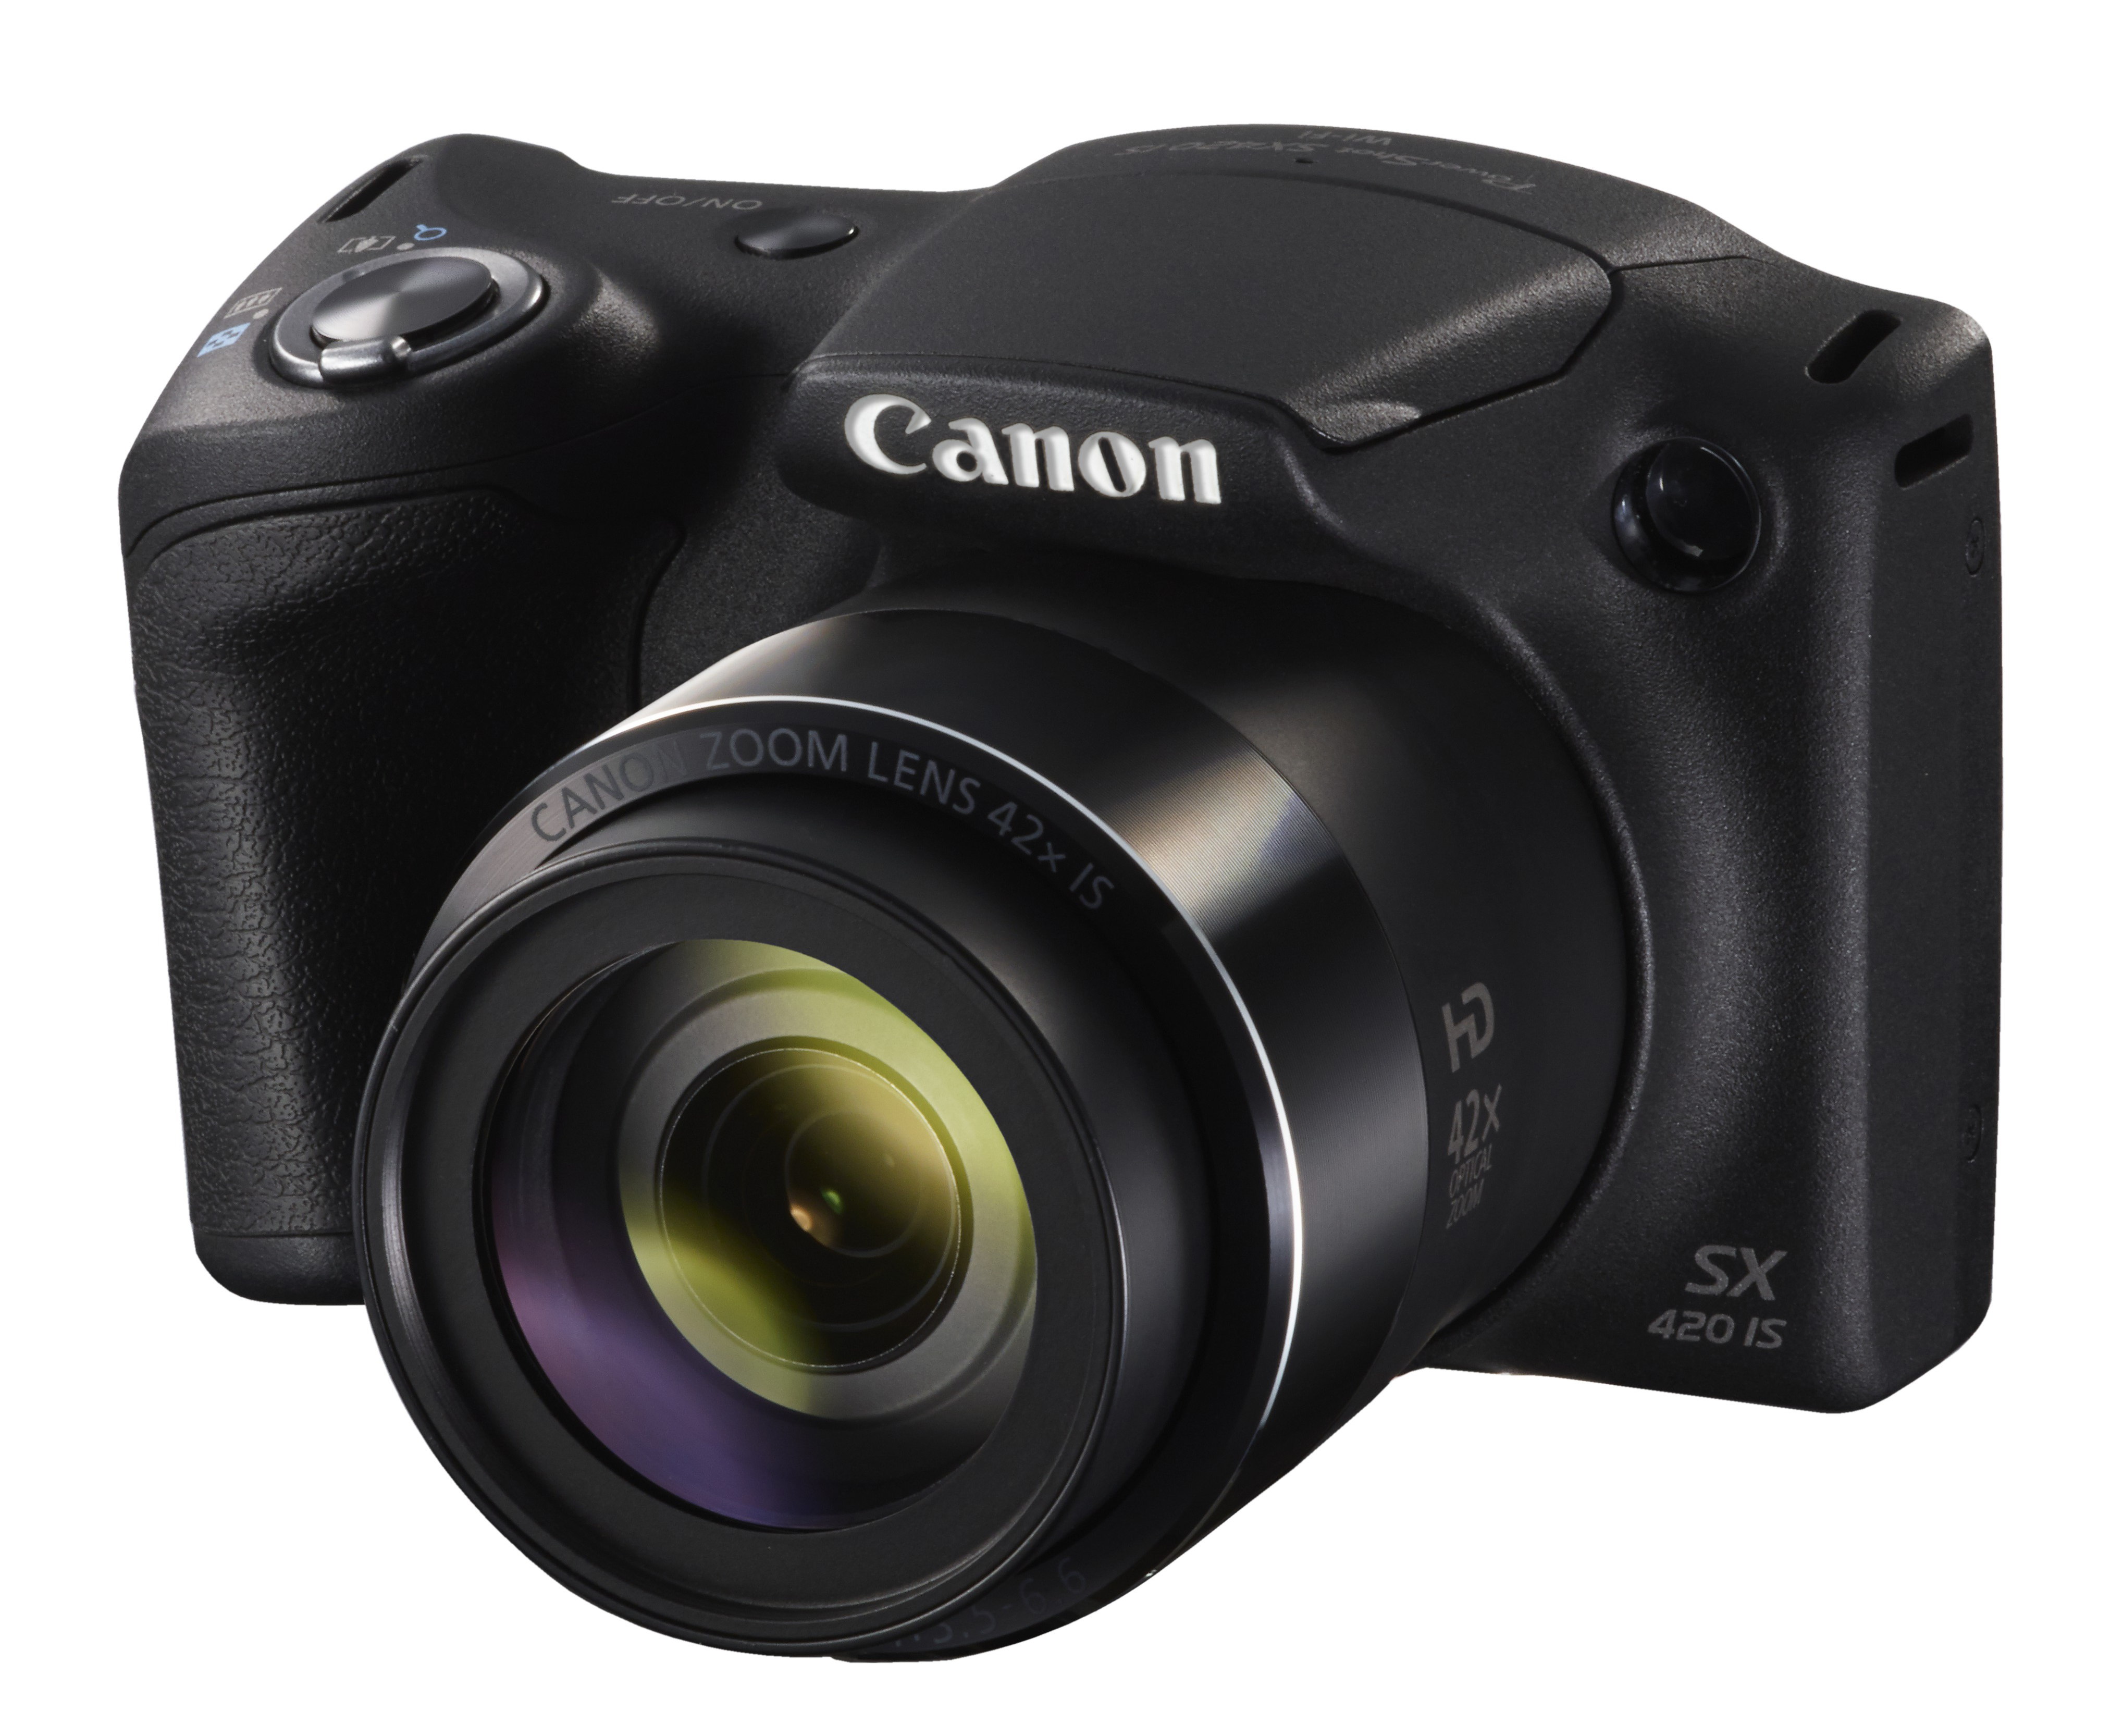 Canon PowerShot SX420 IS - Digital camera - compact - 20.0 MP - 720p / 25 fps - 42x optical zoom - Wi-Fi, NFC - black